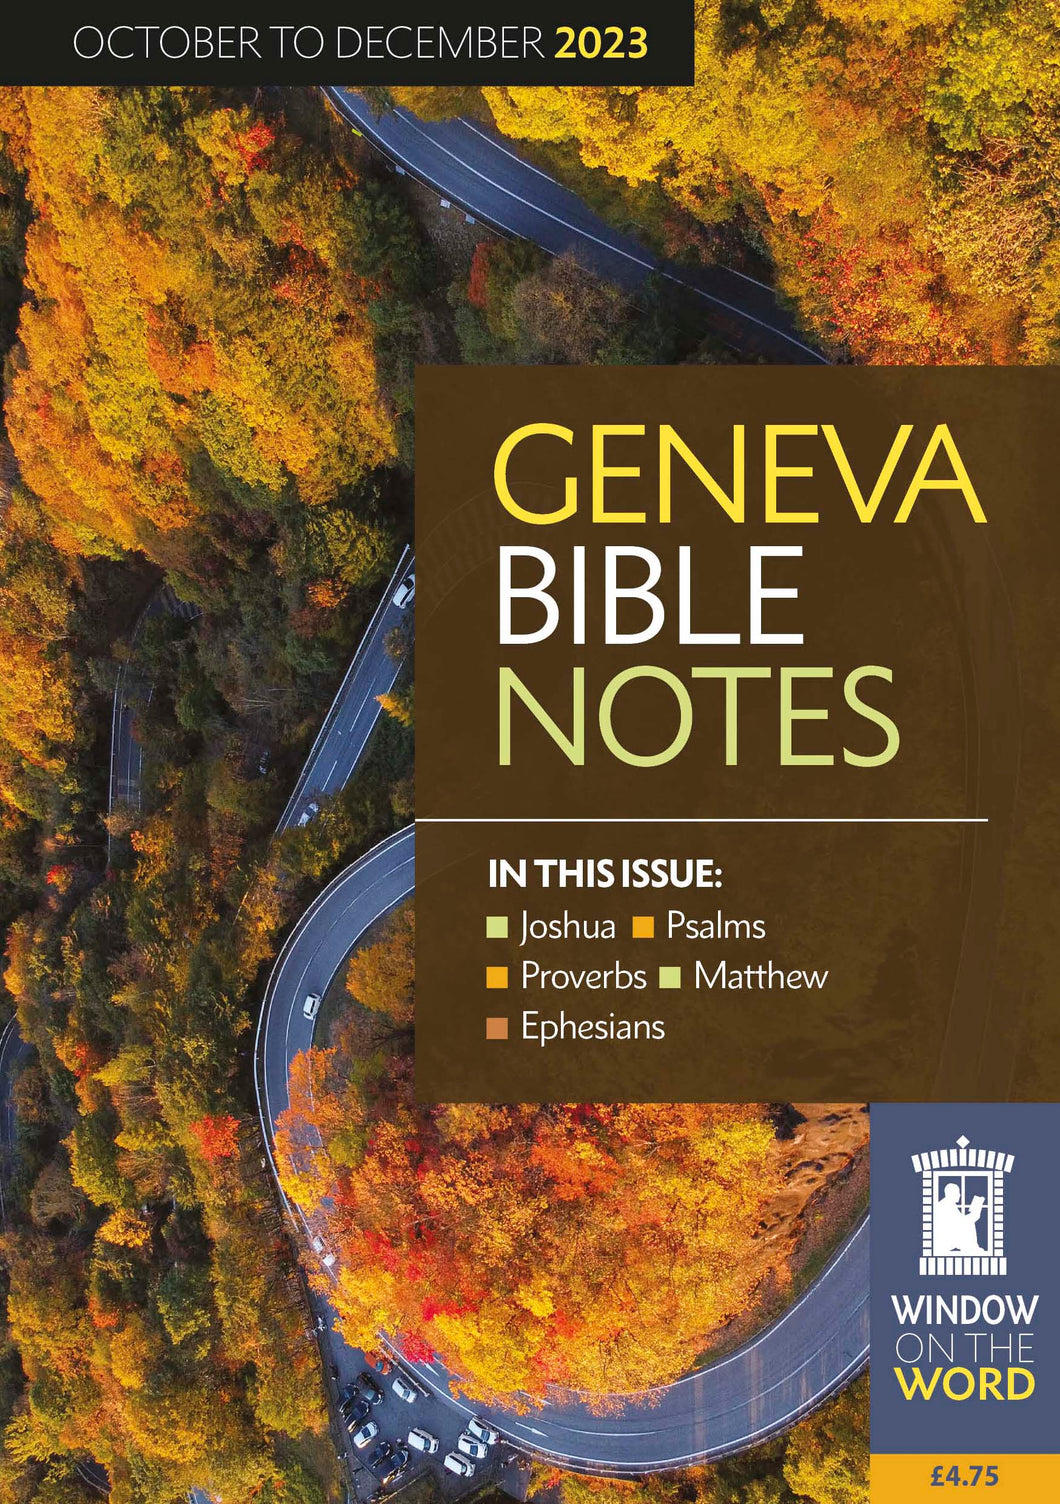 Geneva Bible Notes Oct to Dec 2023